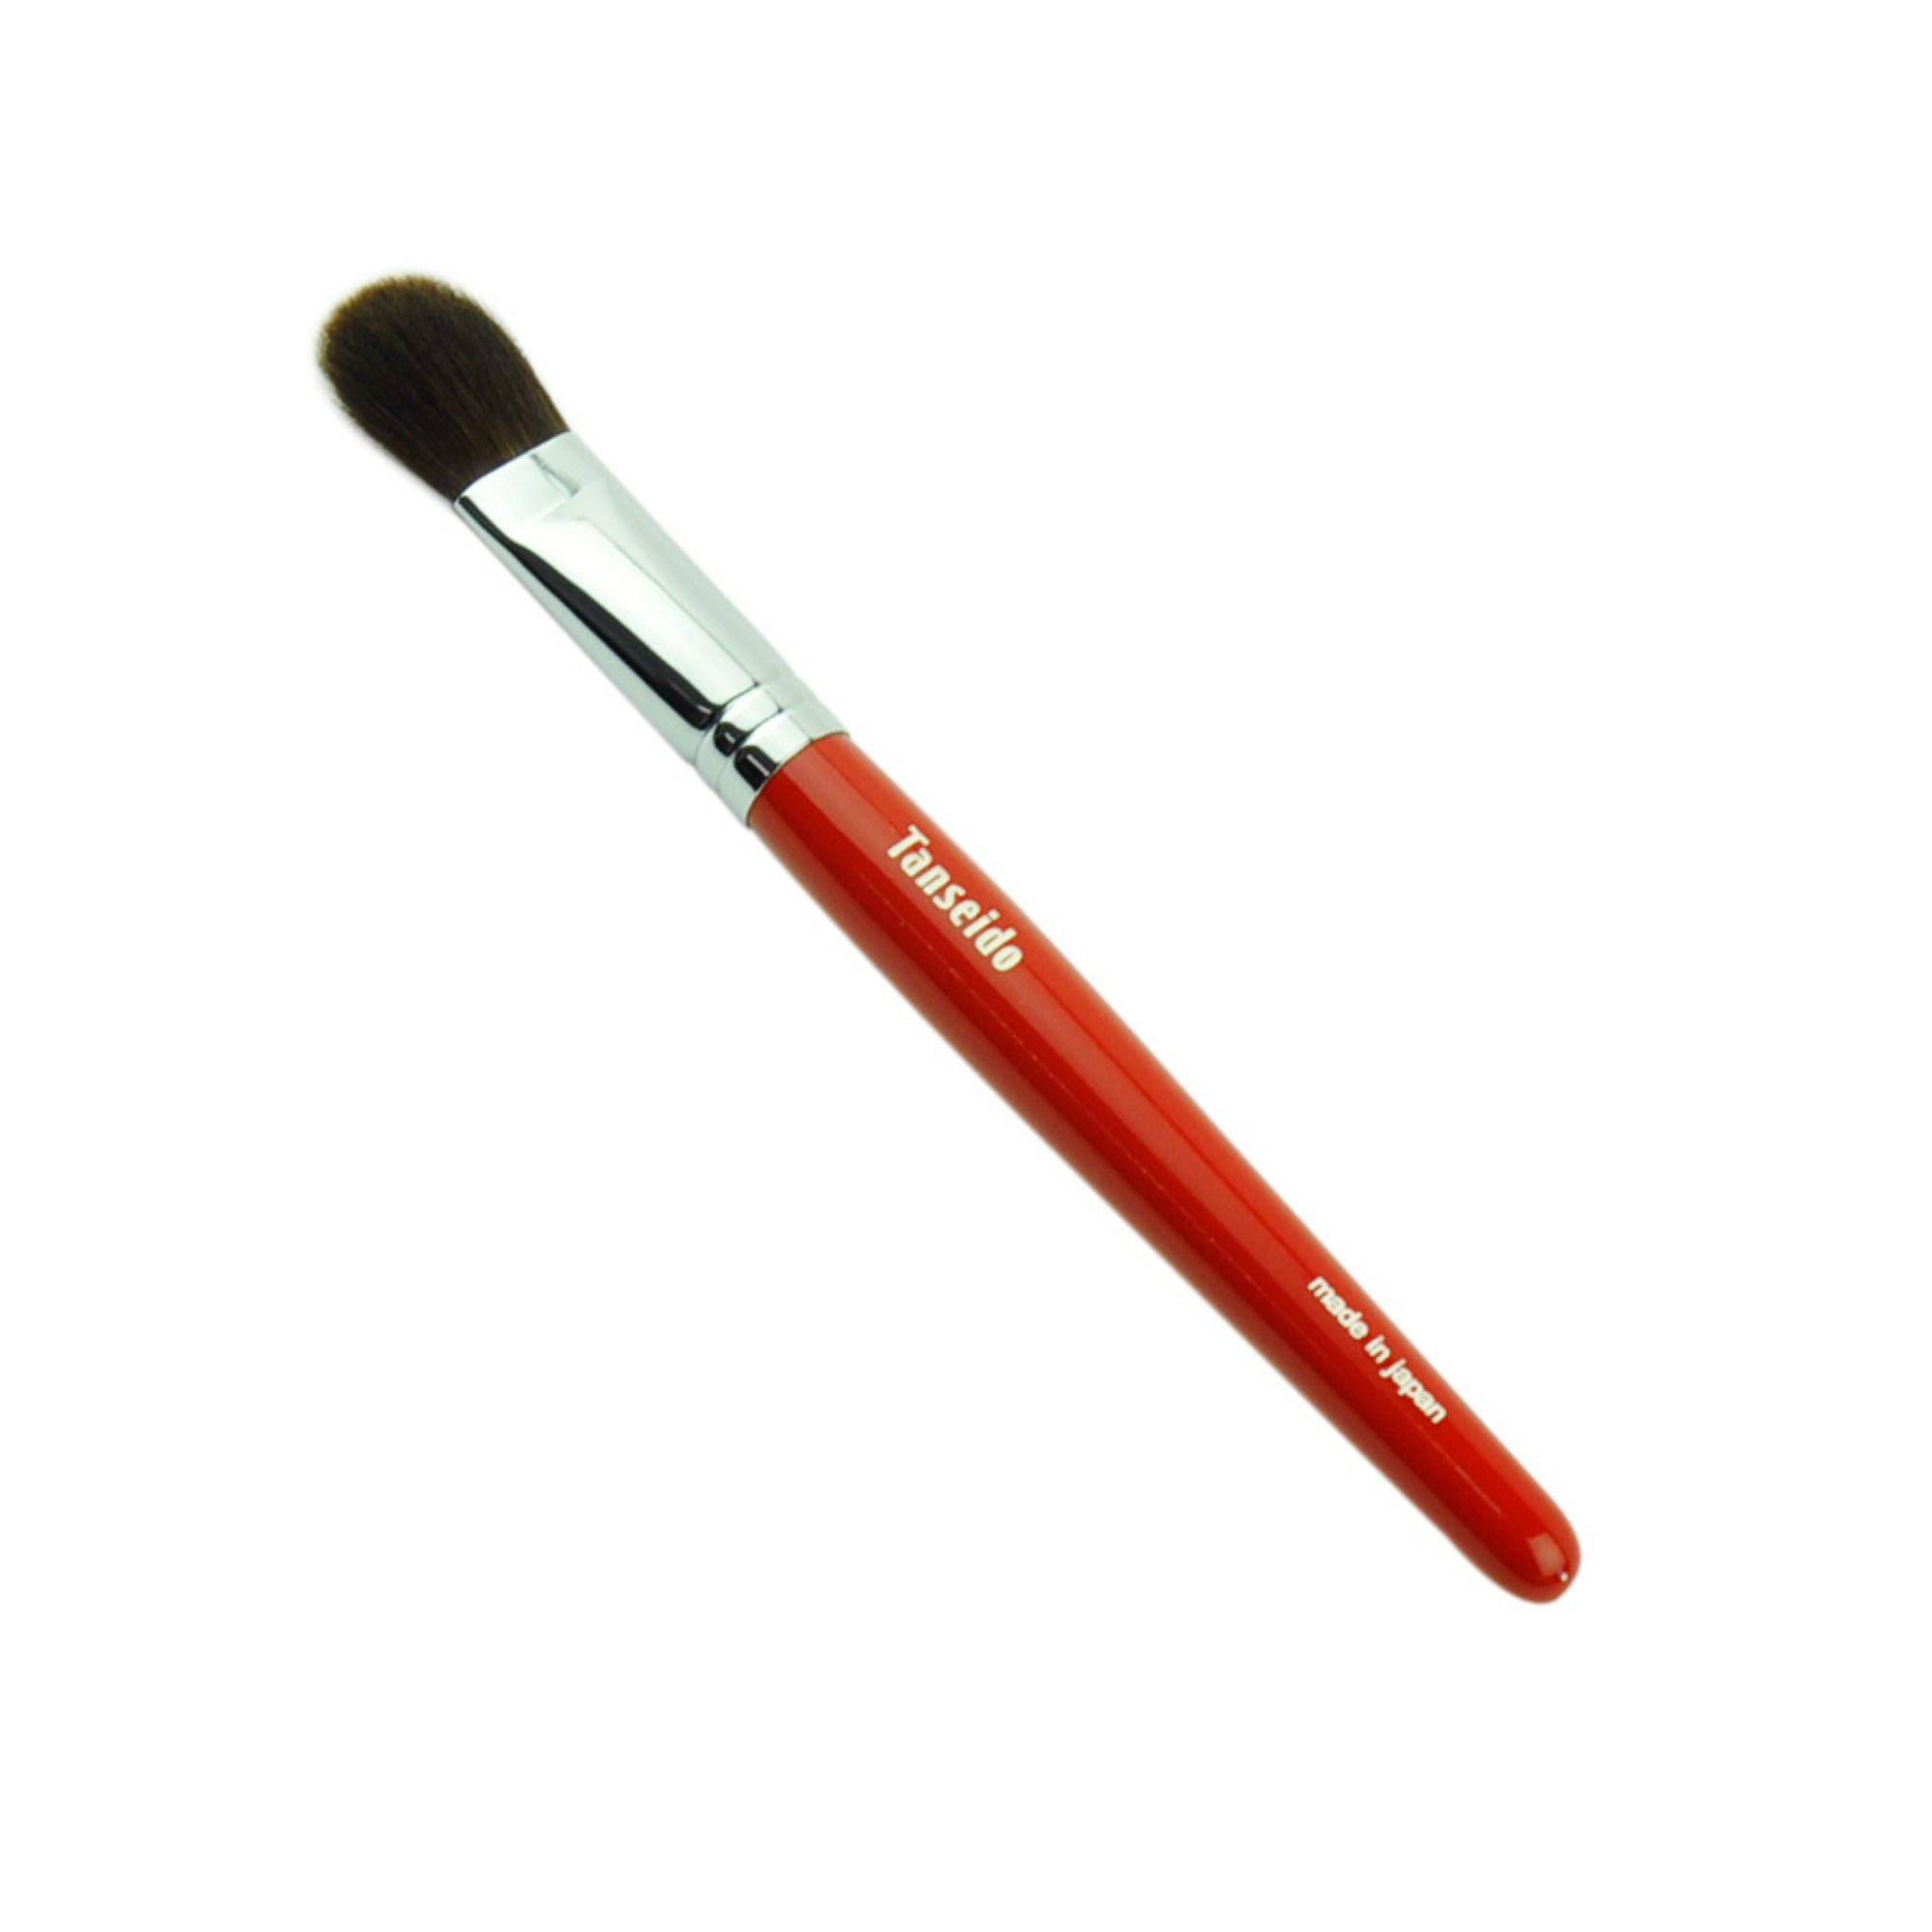 Tanseido SQ12 Eyeshadow Brush - Fude Beauty, Japanese Makeup Brushes